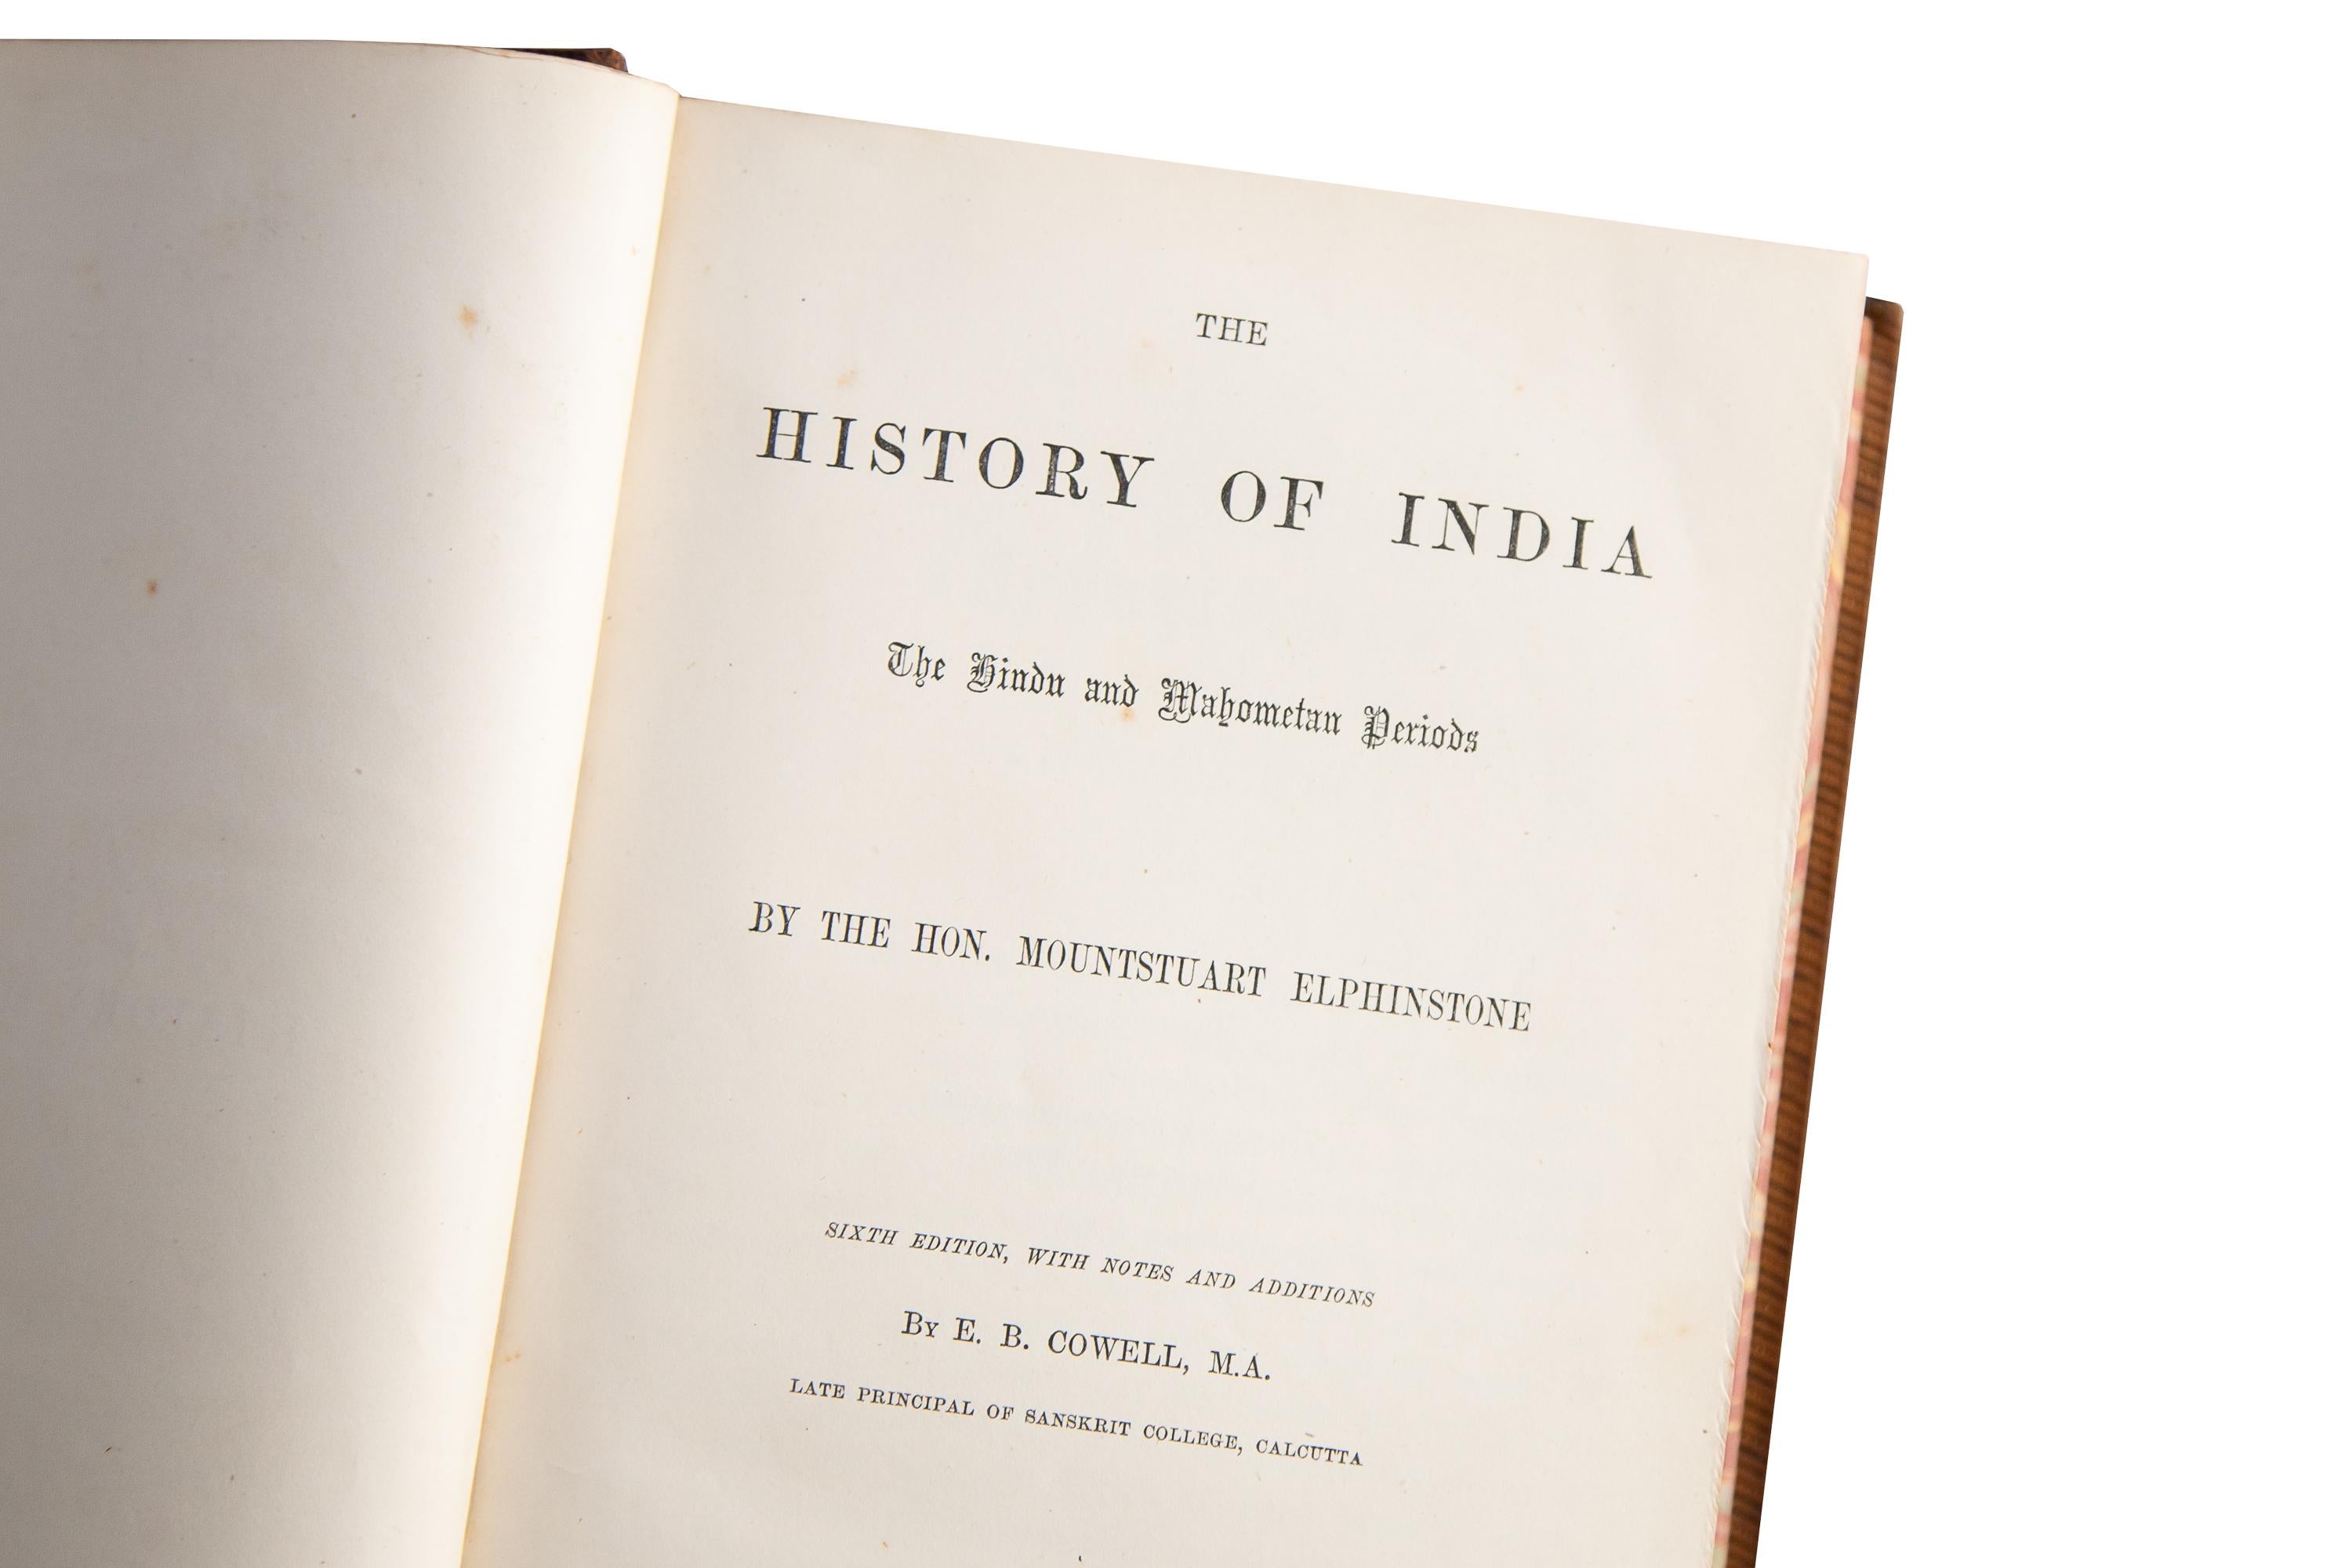 English 1 Volume, the Hon. Mountstewart Elphinstone, the History of India